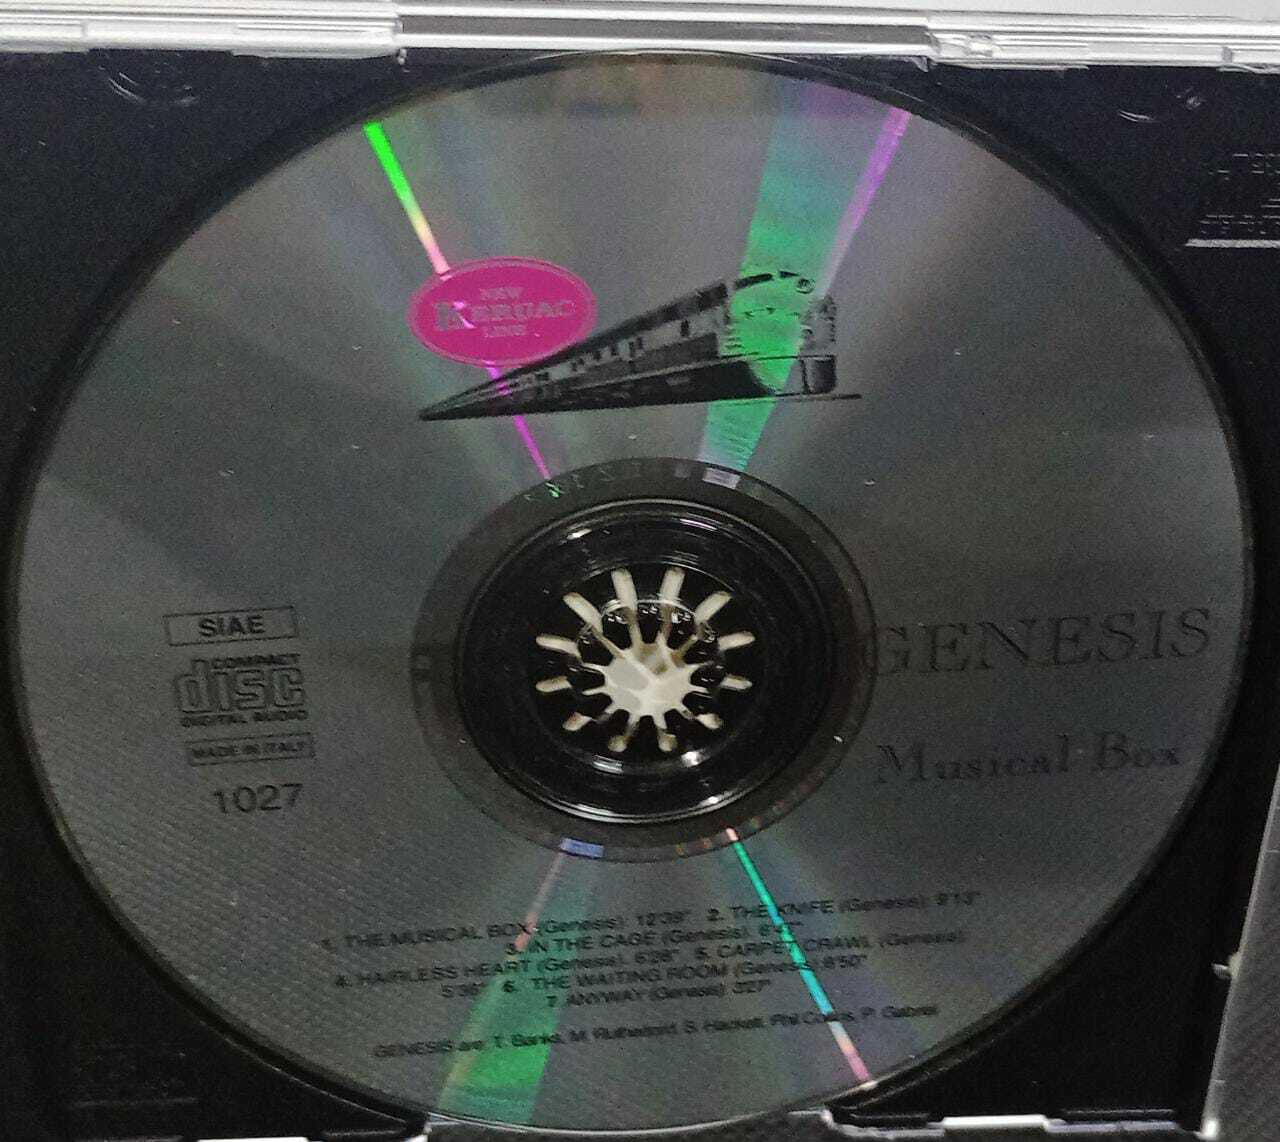 CD - Genesis - Musical Box (Italy)